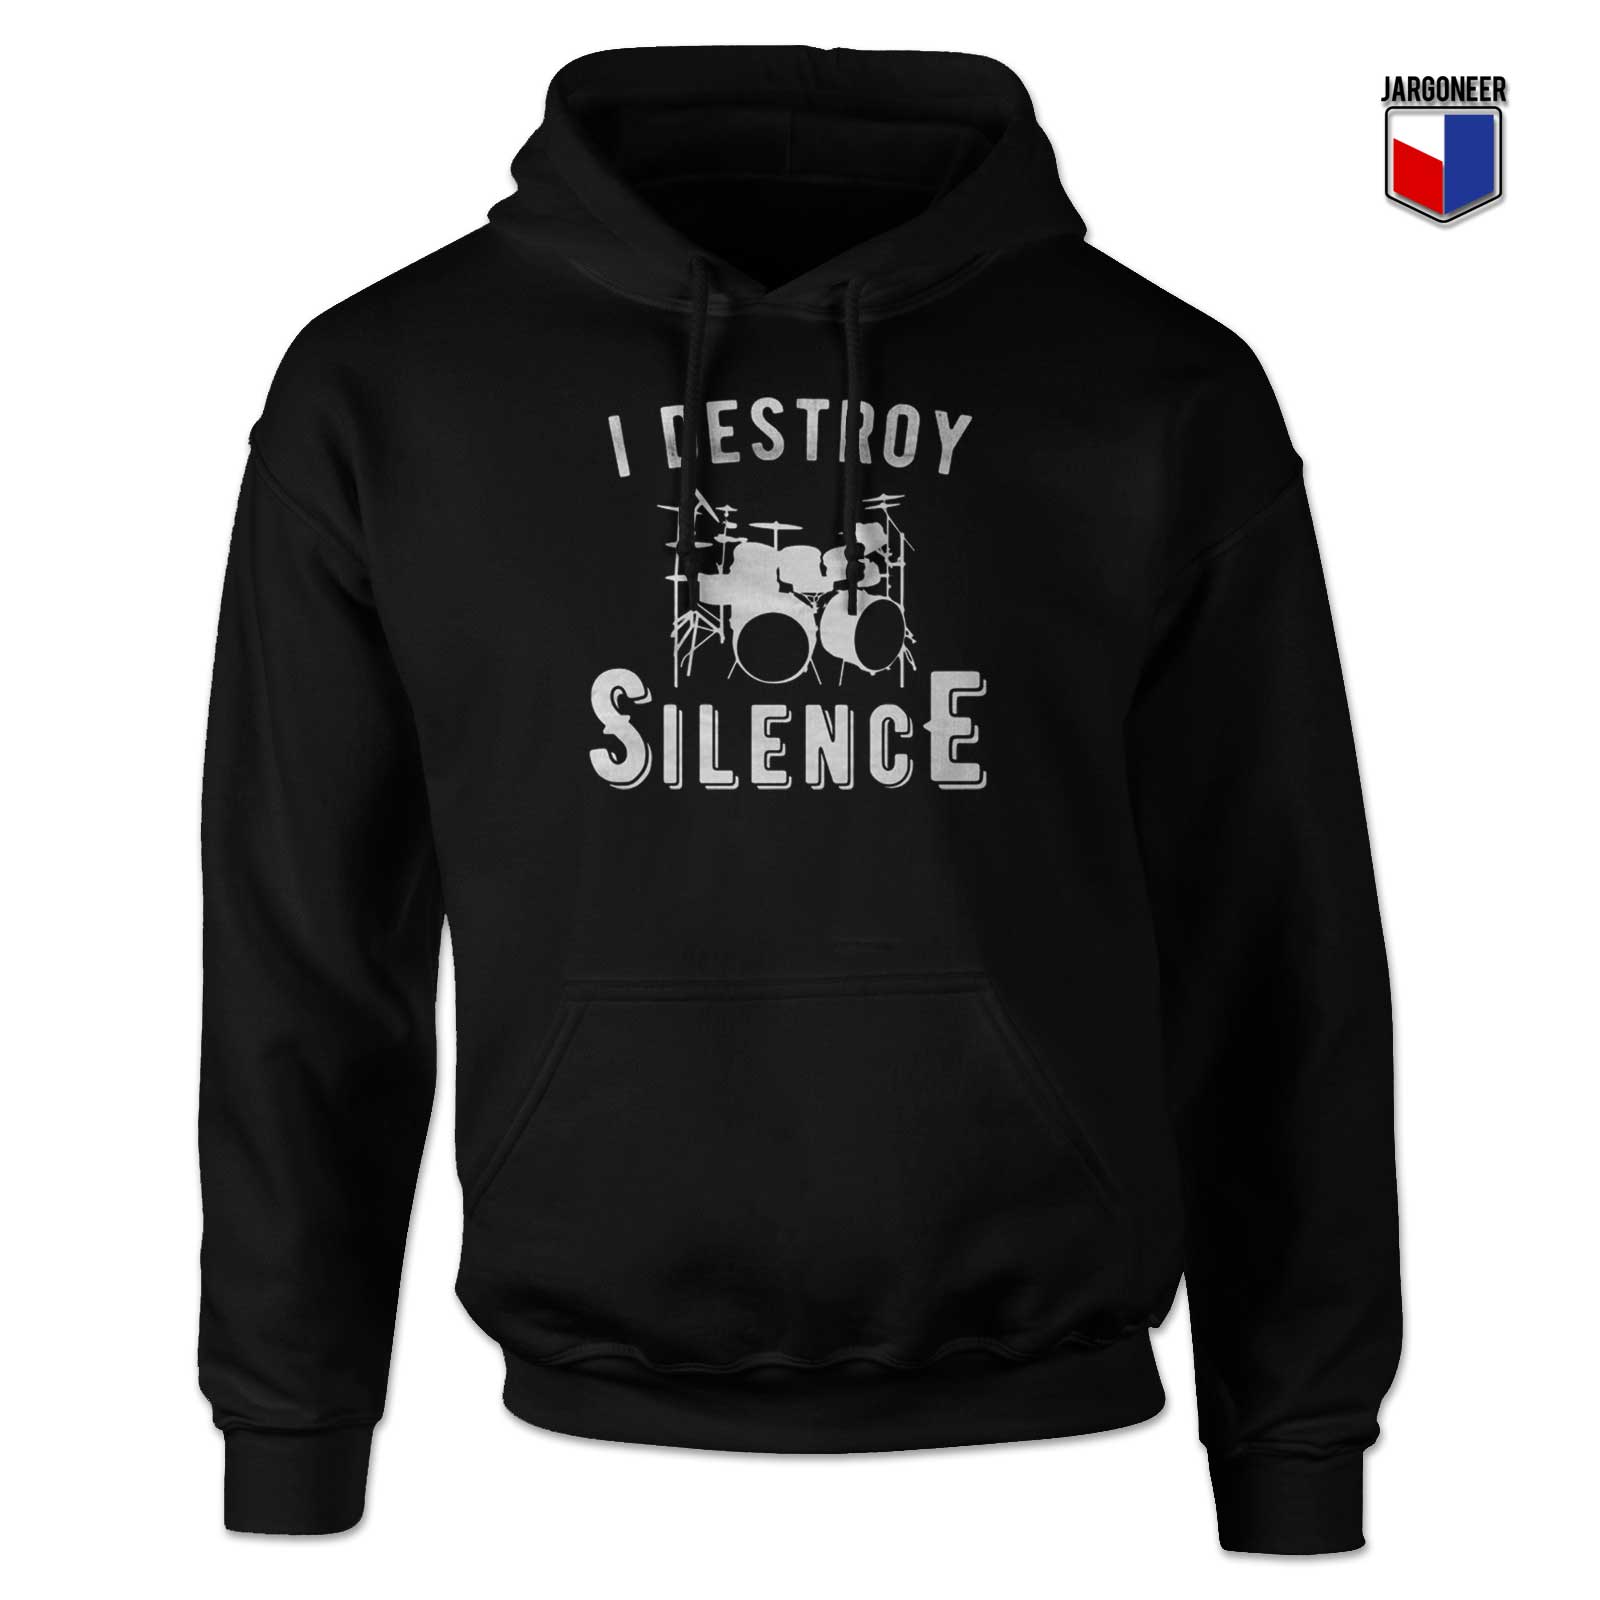 I Destroy Silence Hoodie - Shop Unique Graphic Cool Shirt Designs